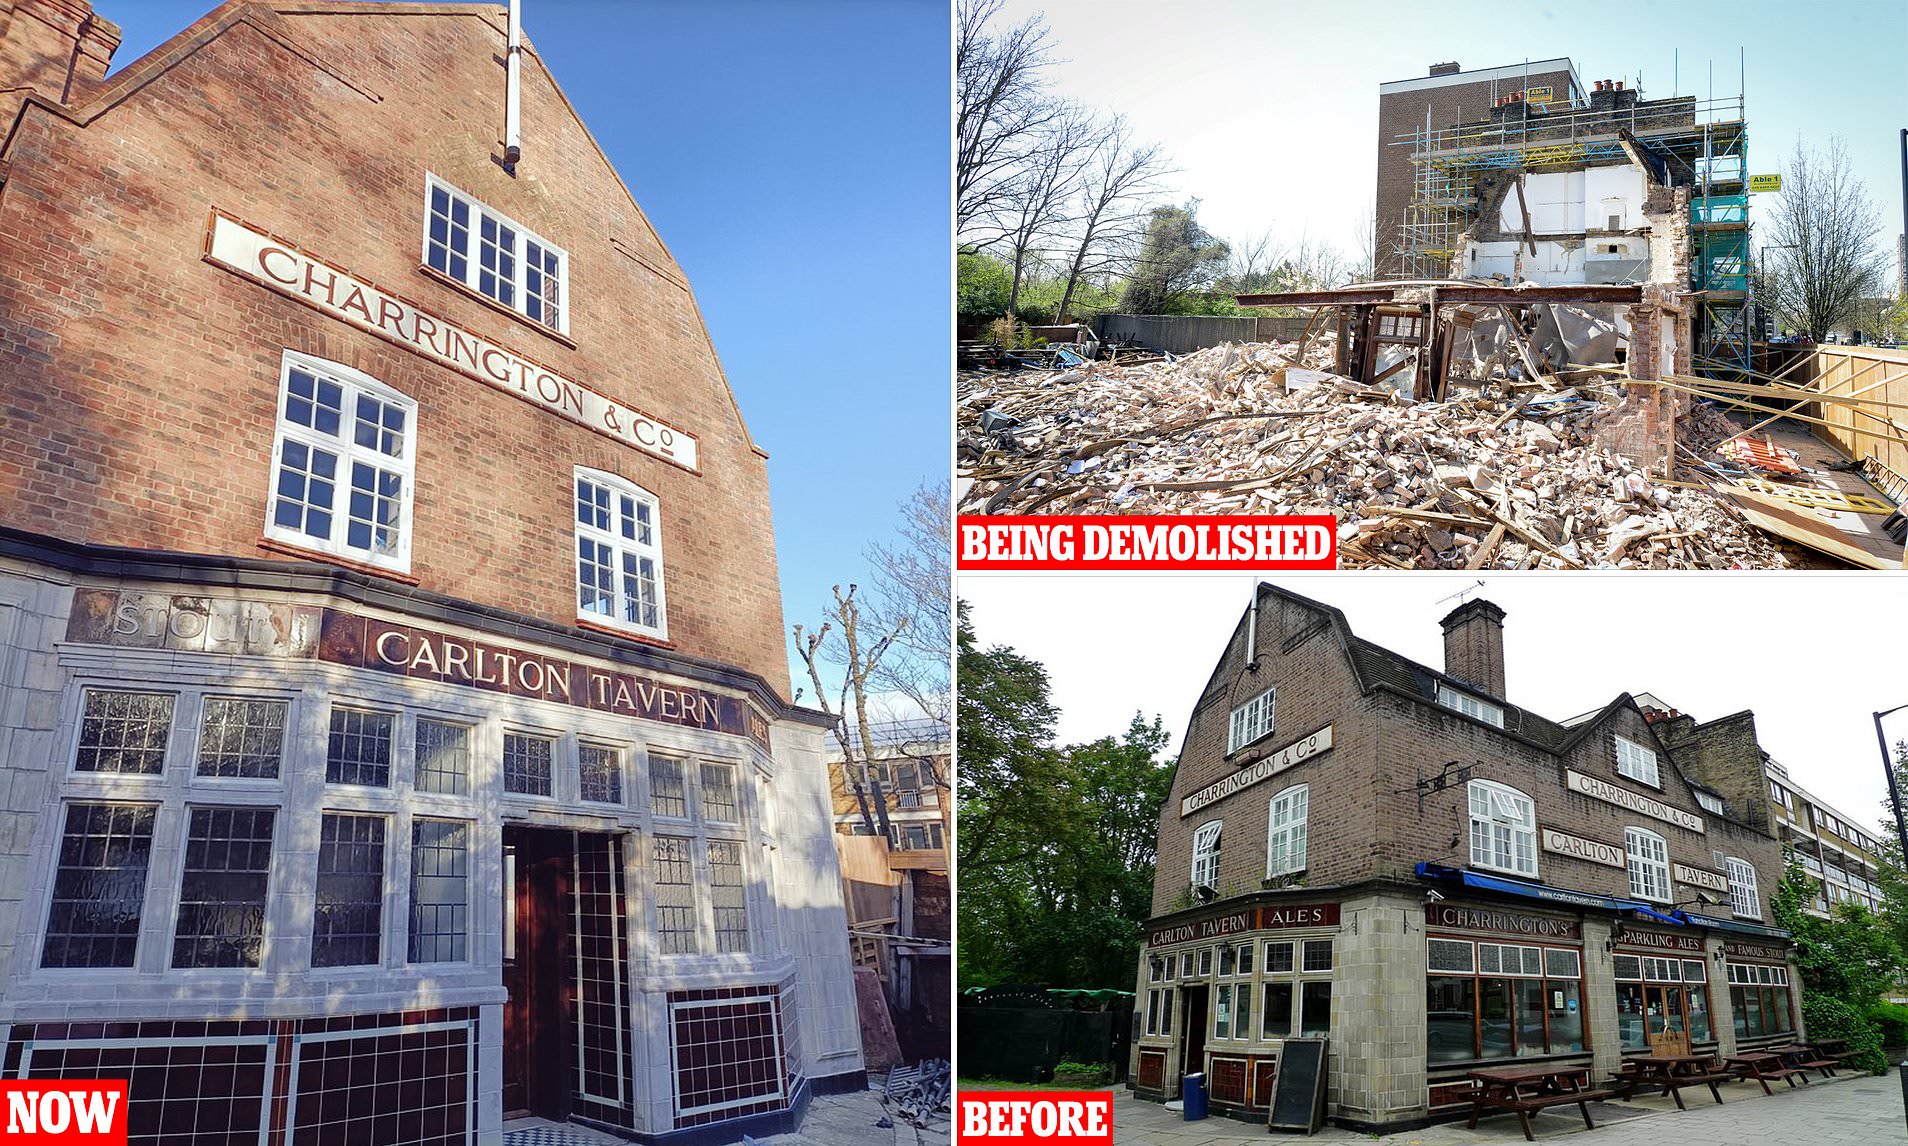 The Carlton Tavern now; The Carlton Tavern being demolished; The Carlton Tavern before